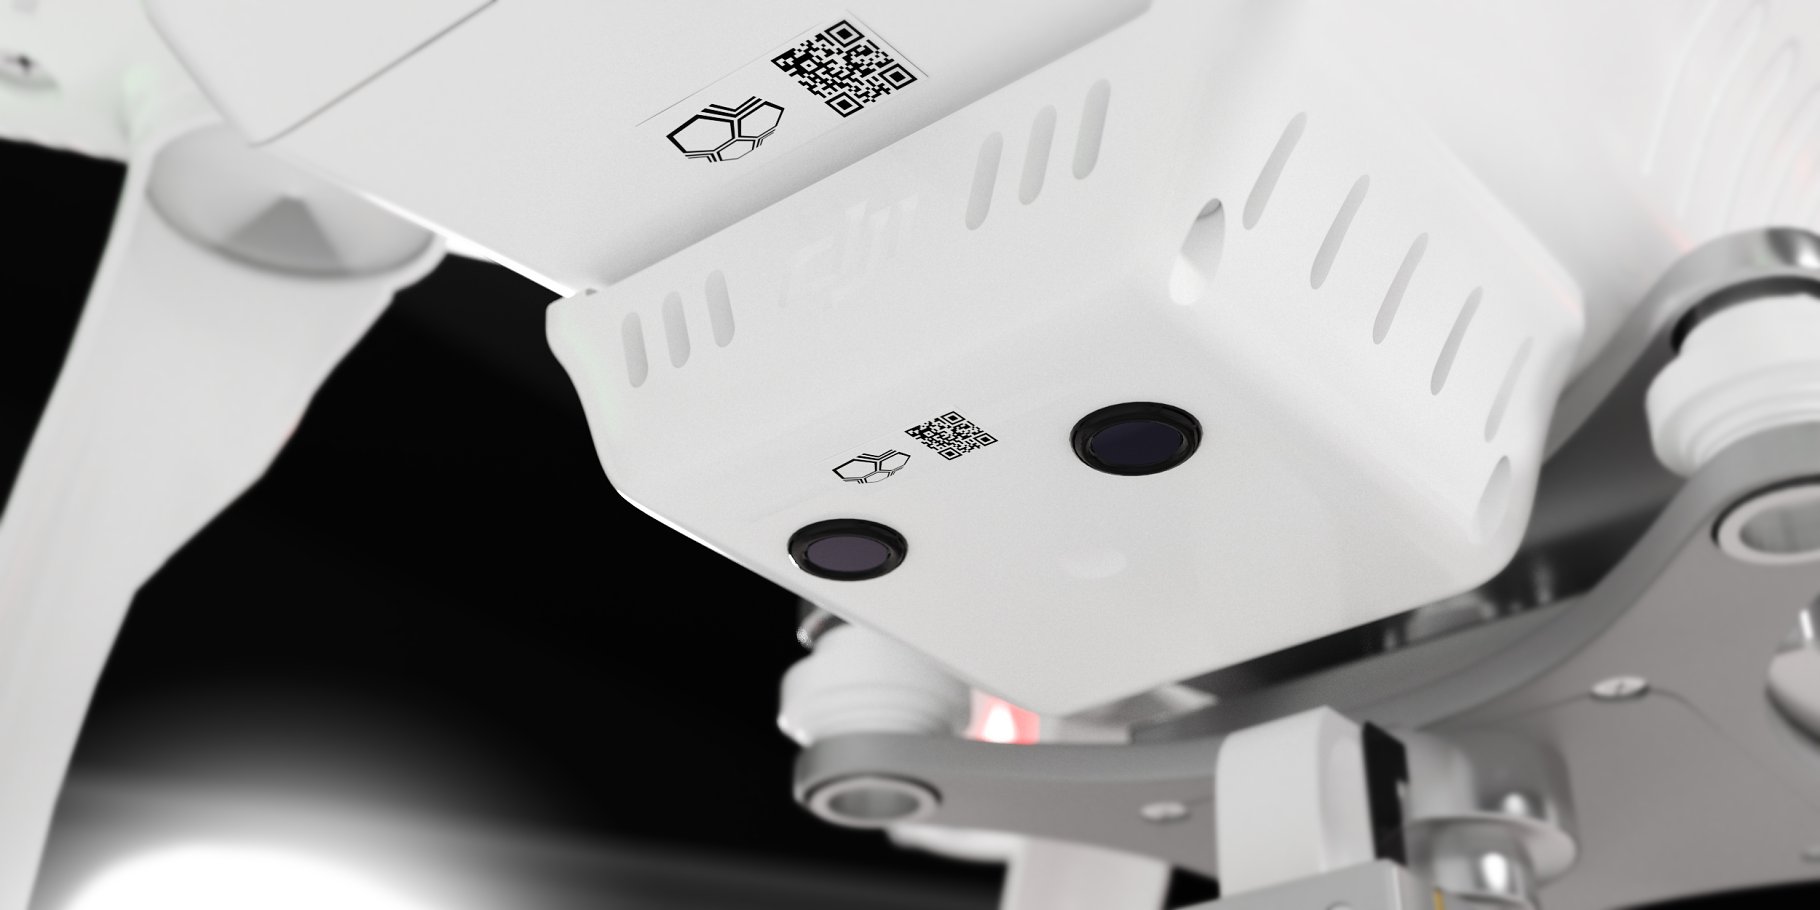 Beautiful rendering of a white DJI Phantom 3 drone